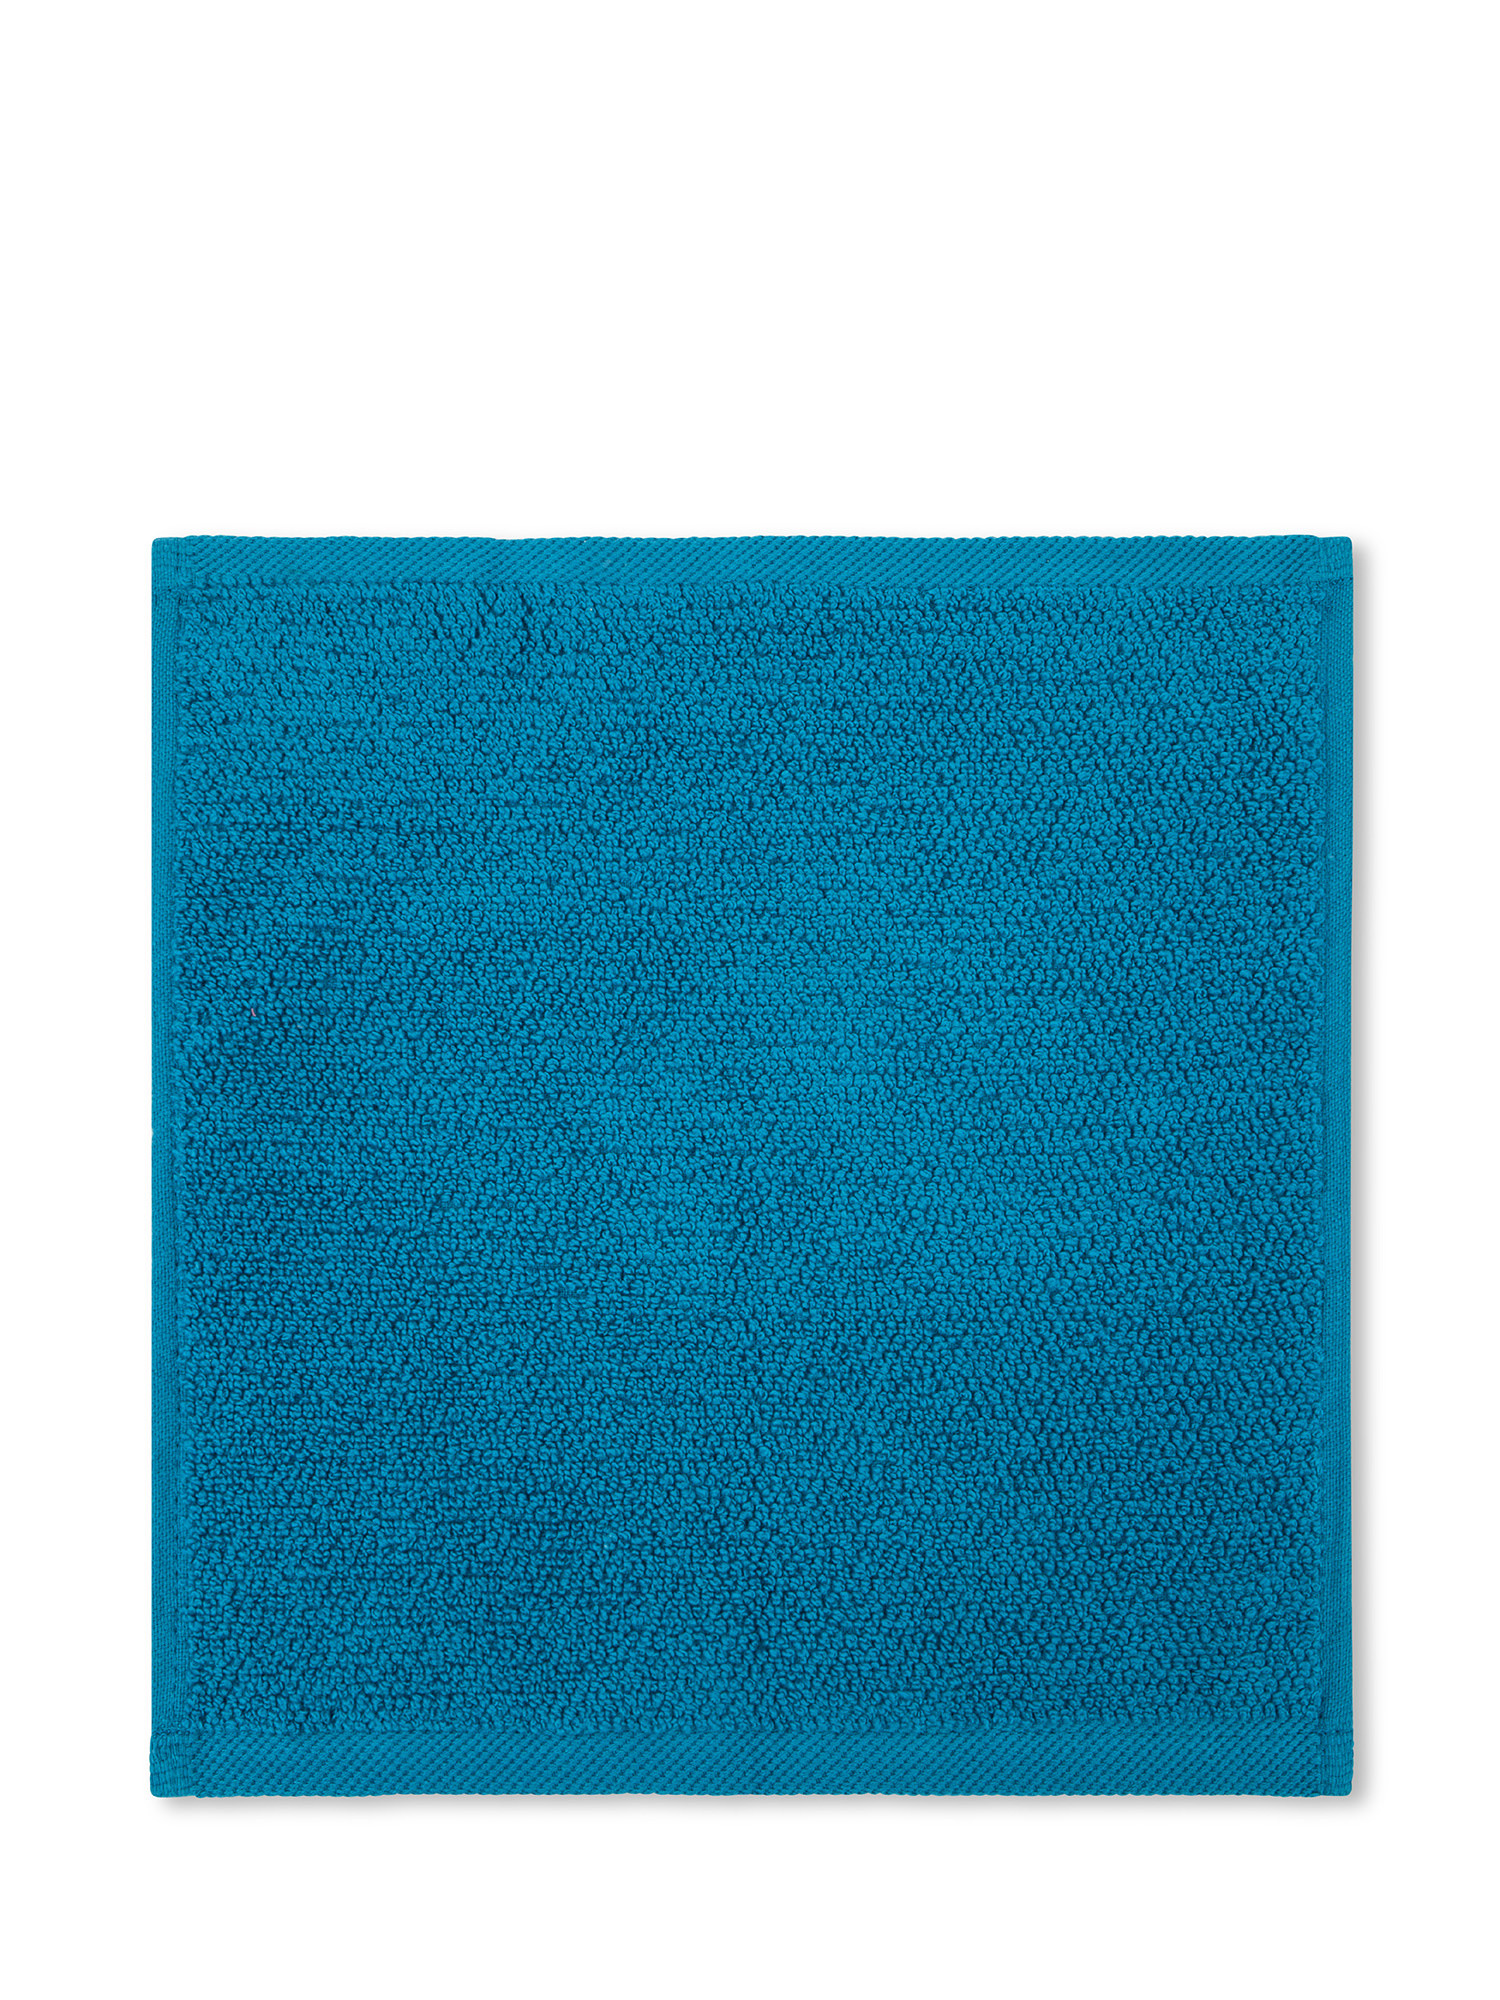 Set 4 lavette in spugna di cotone, Blu bluette, large image number 1